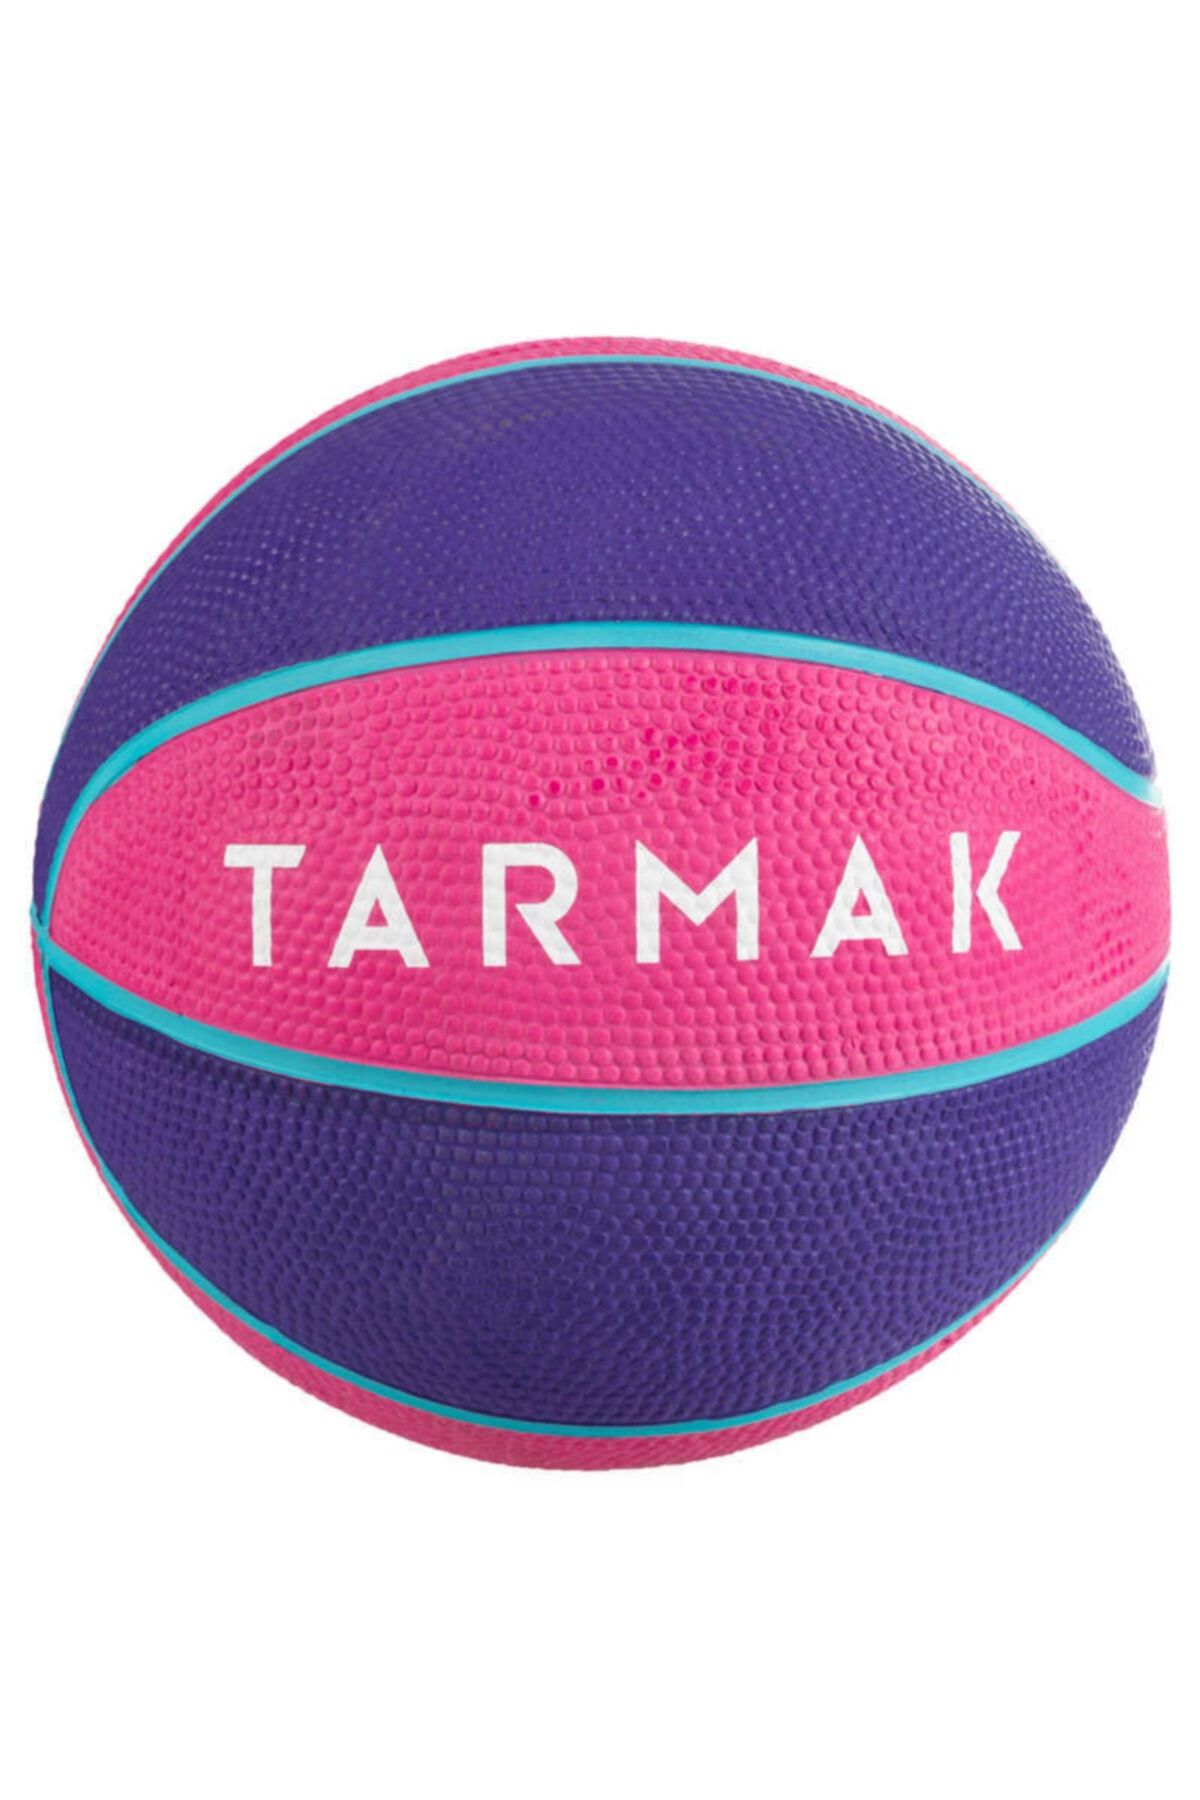 DOGASTR Mini Basketbol Topu